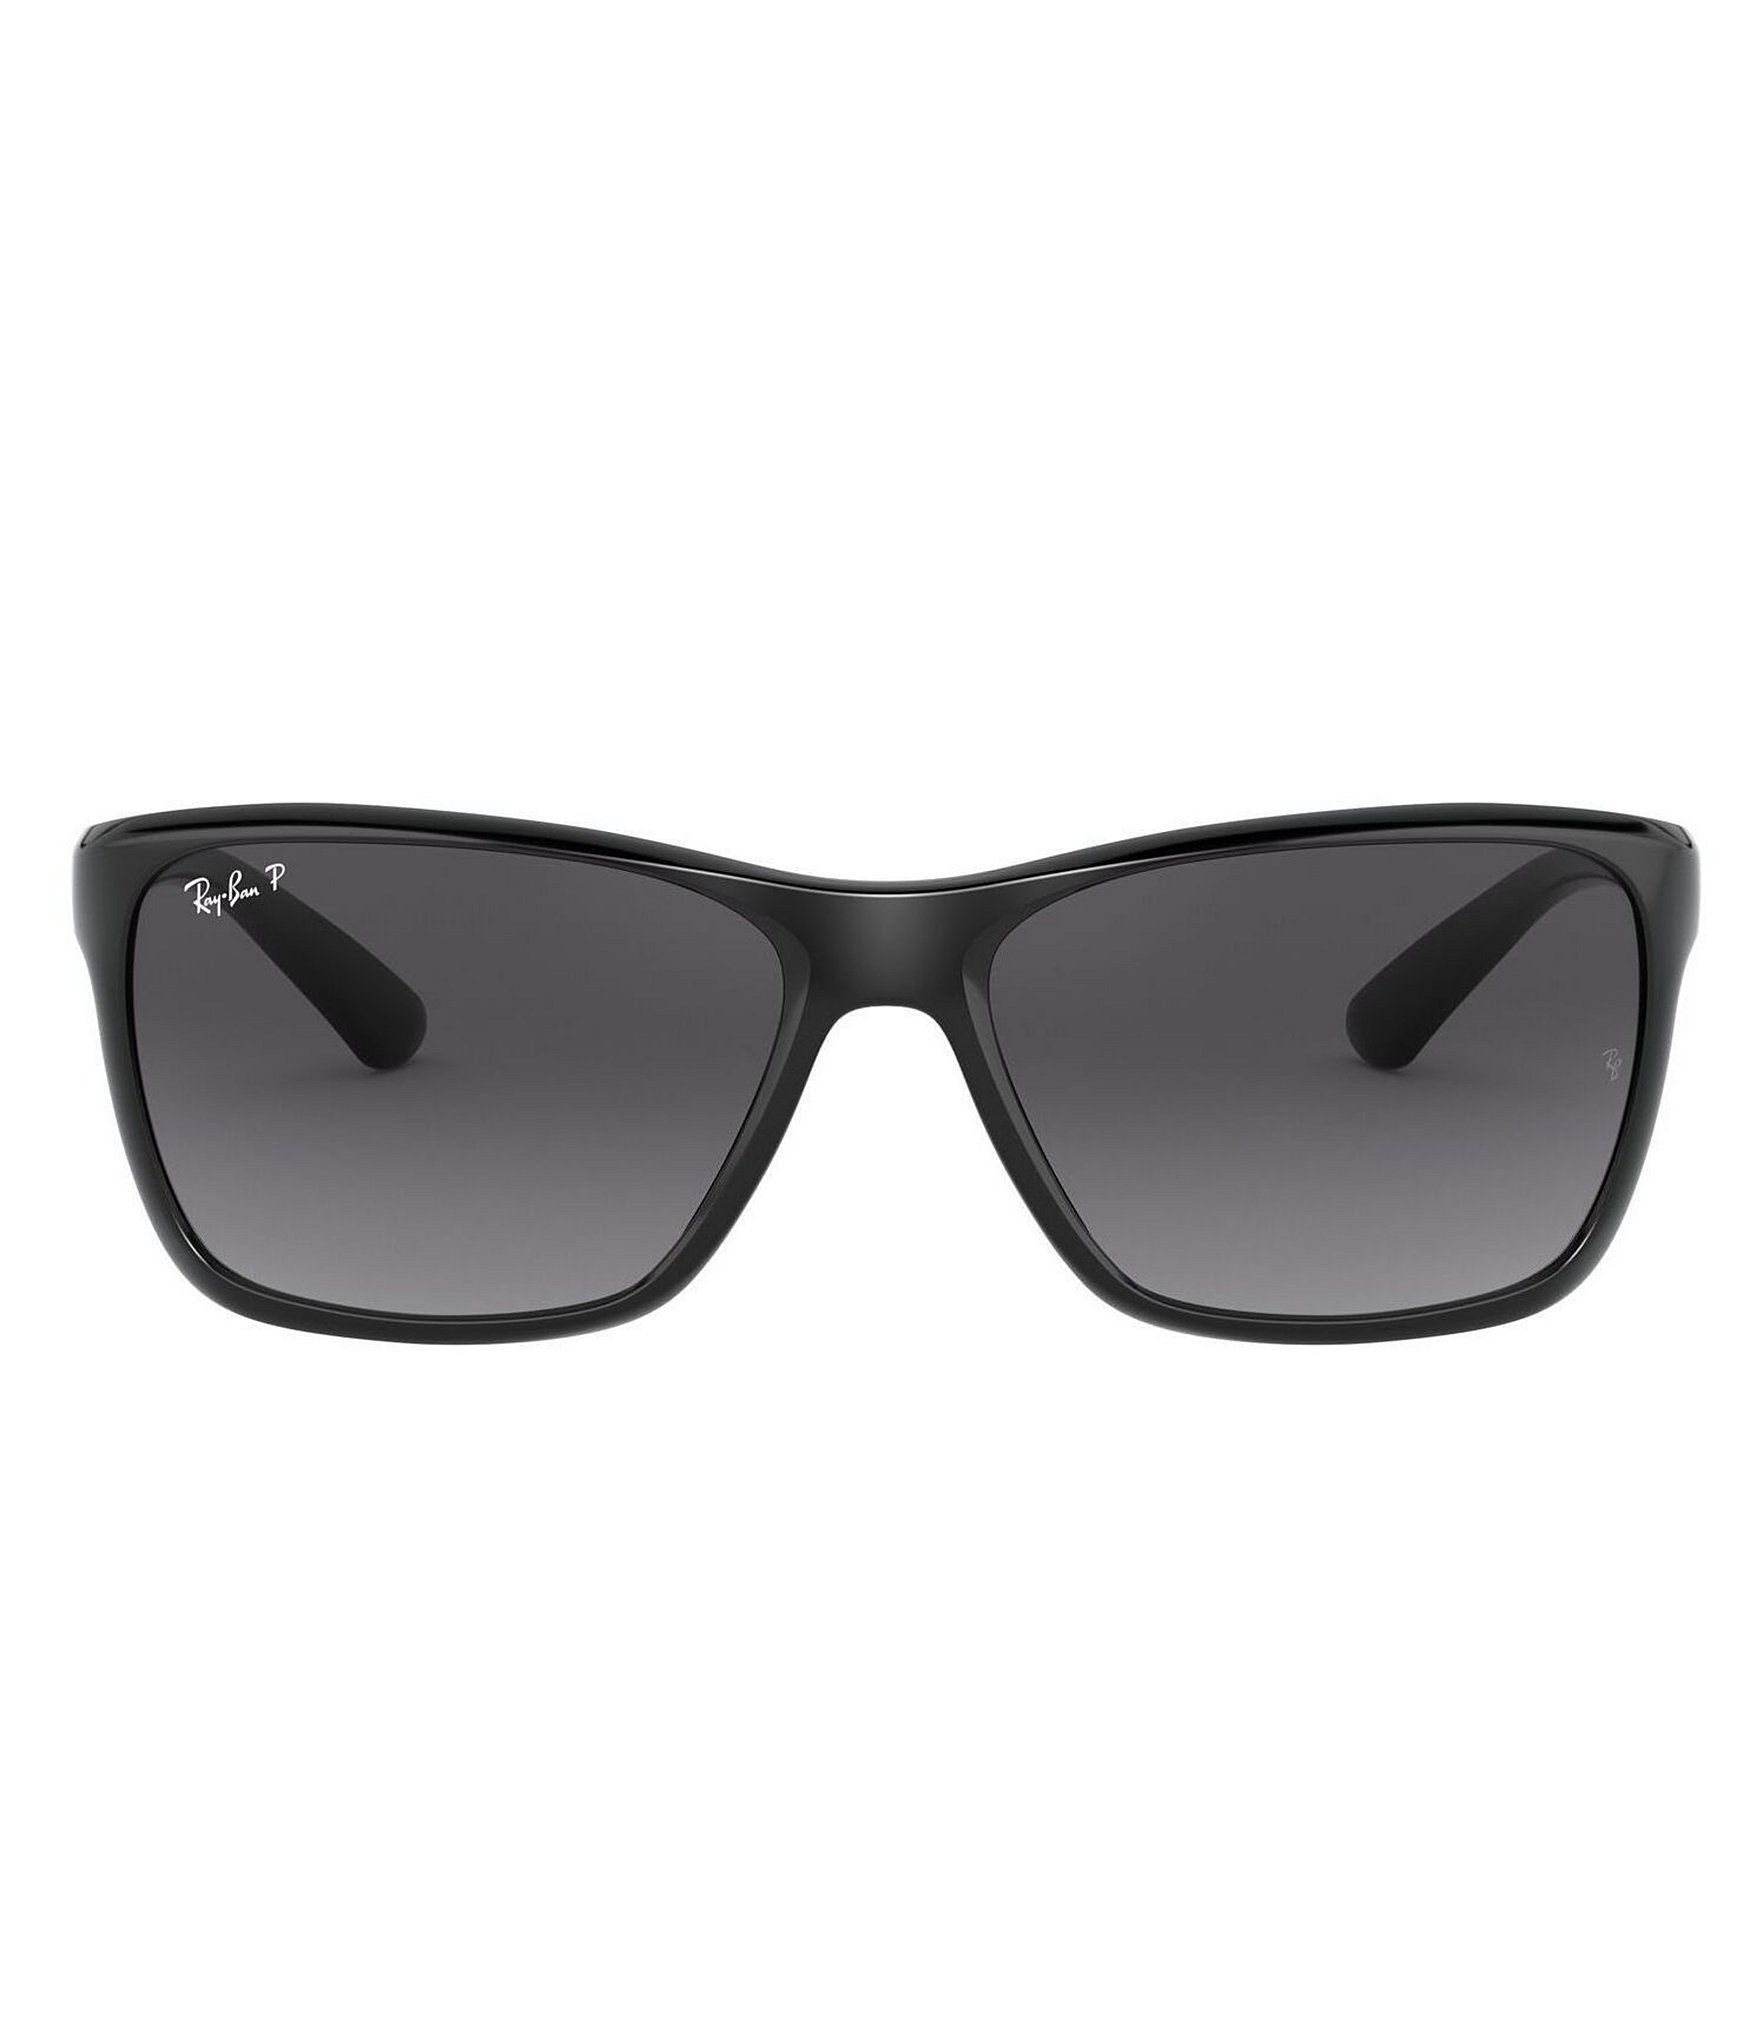 Ray-Ban RB4331 Square Polarized  61mm Sunglasses - Black -   13 dress Fashion ray bans ideas